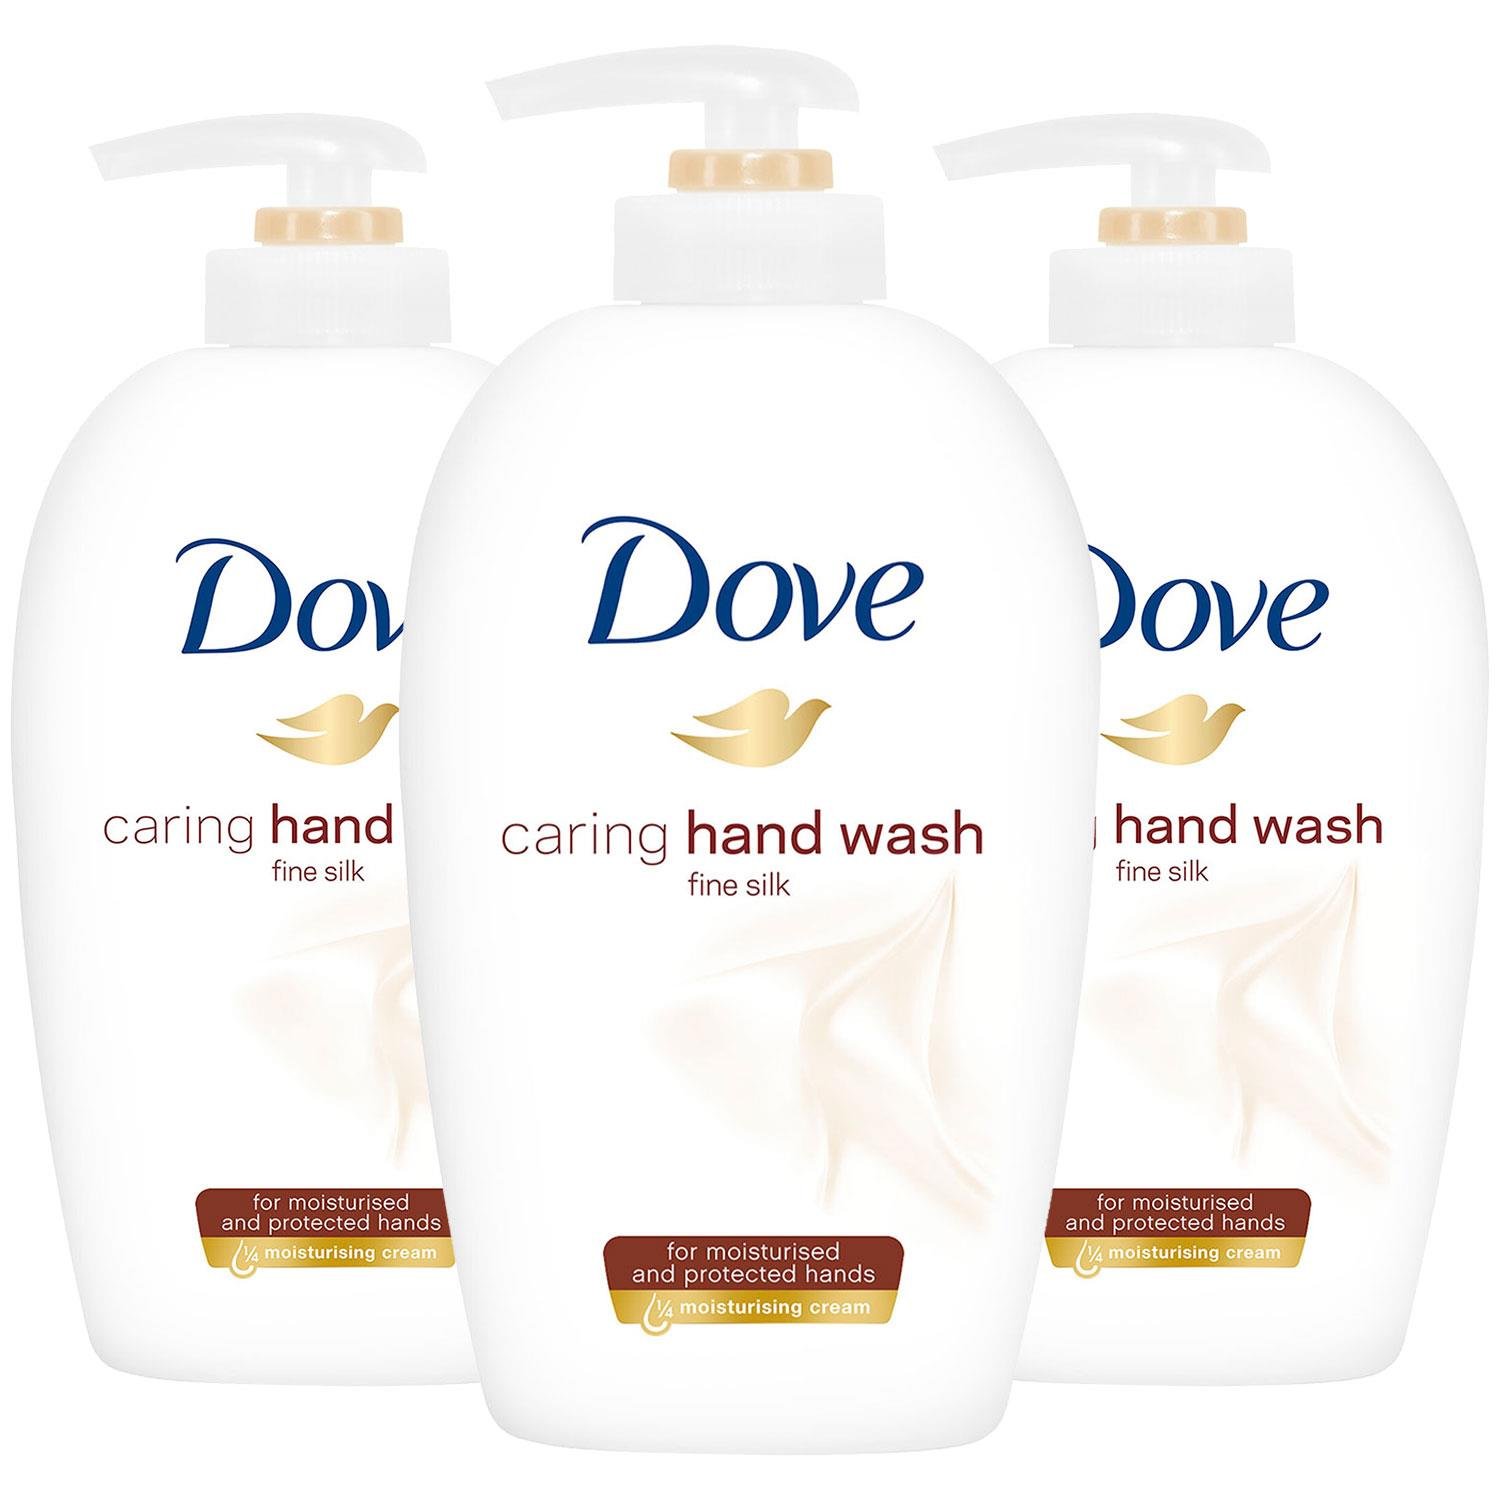 Nursem Caring Hand Wash 300ml